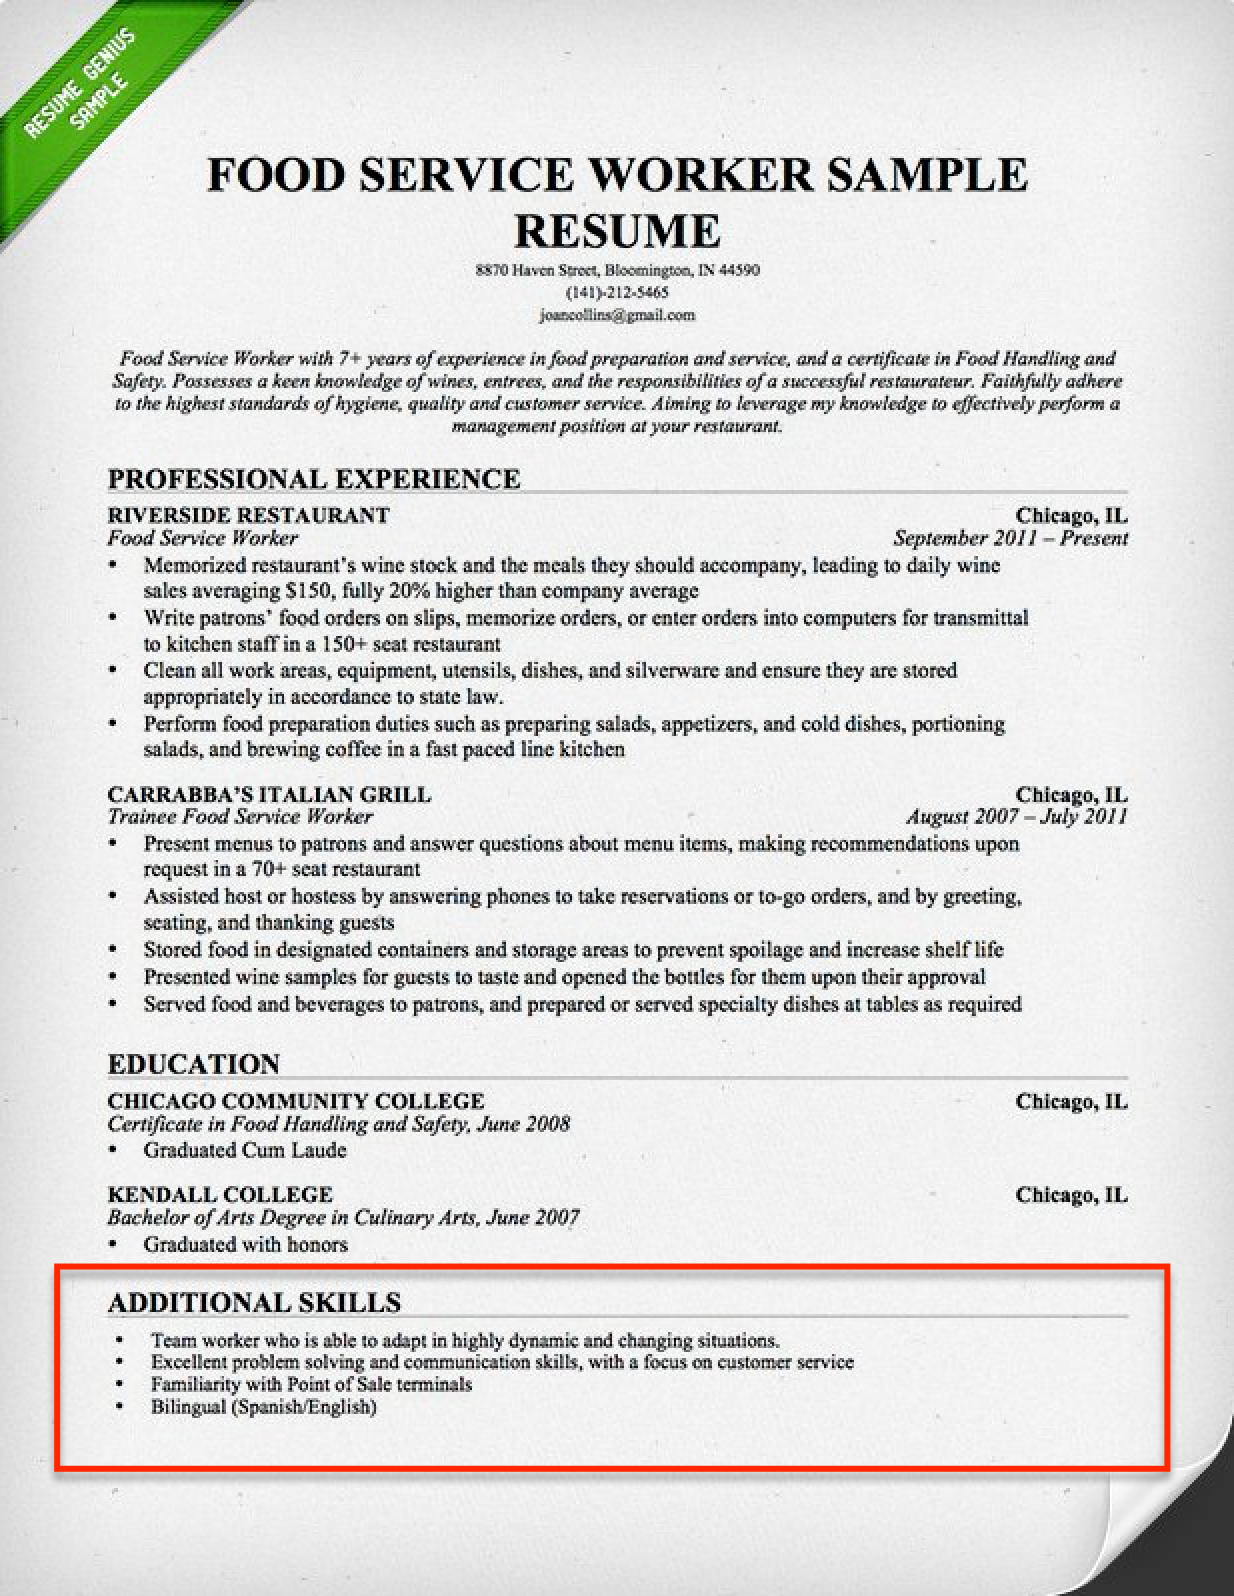 Resume Skills Section 250+ Skills for Your Resume  ResumeGenius